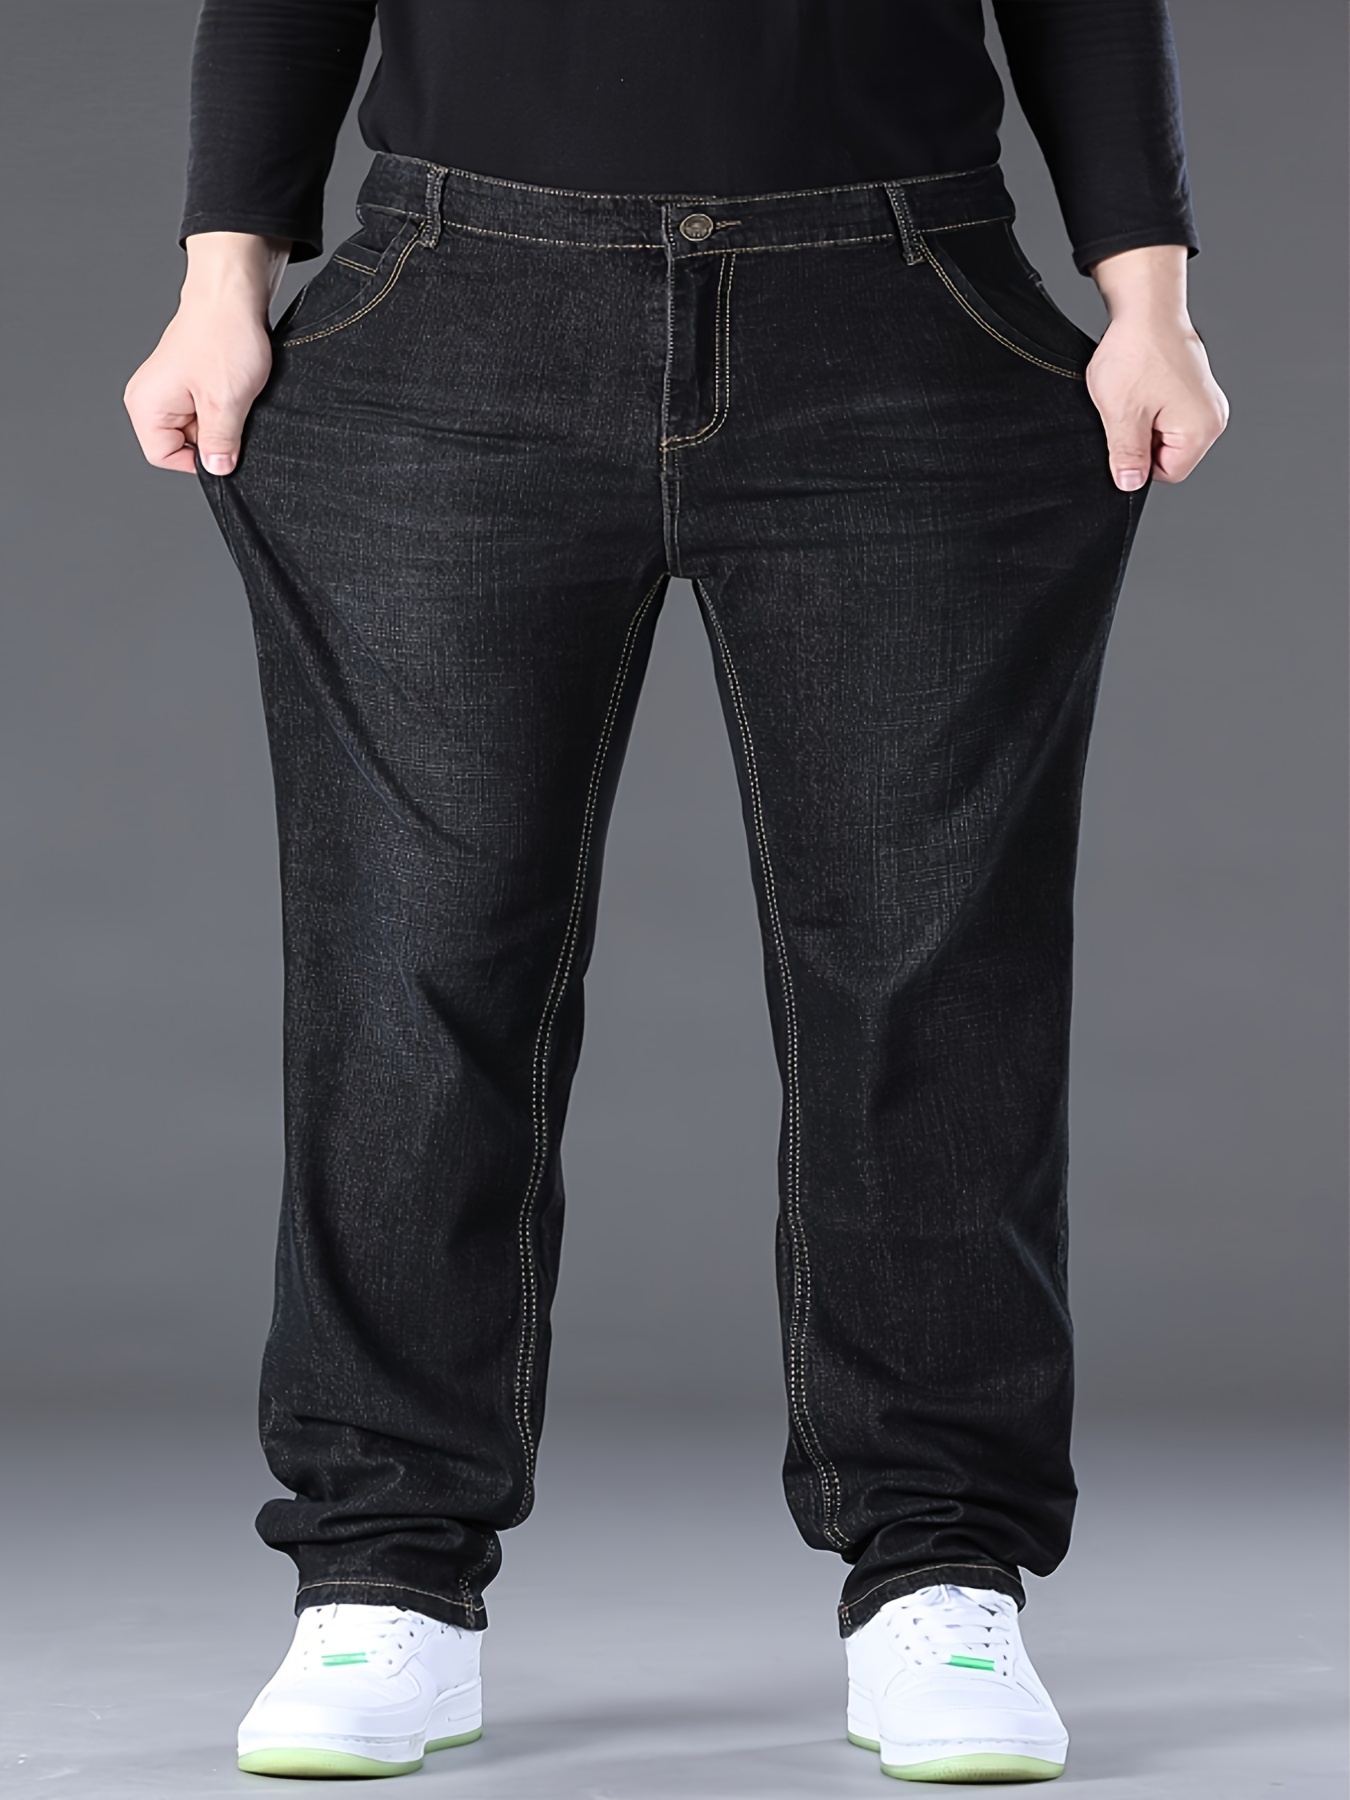 Warrior Jeans for Men - Buy Wholesale Mens Denim Jeans Online in India